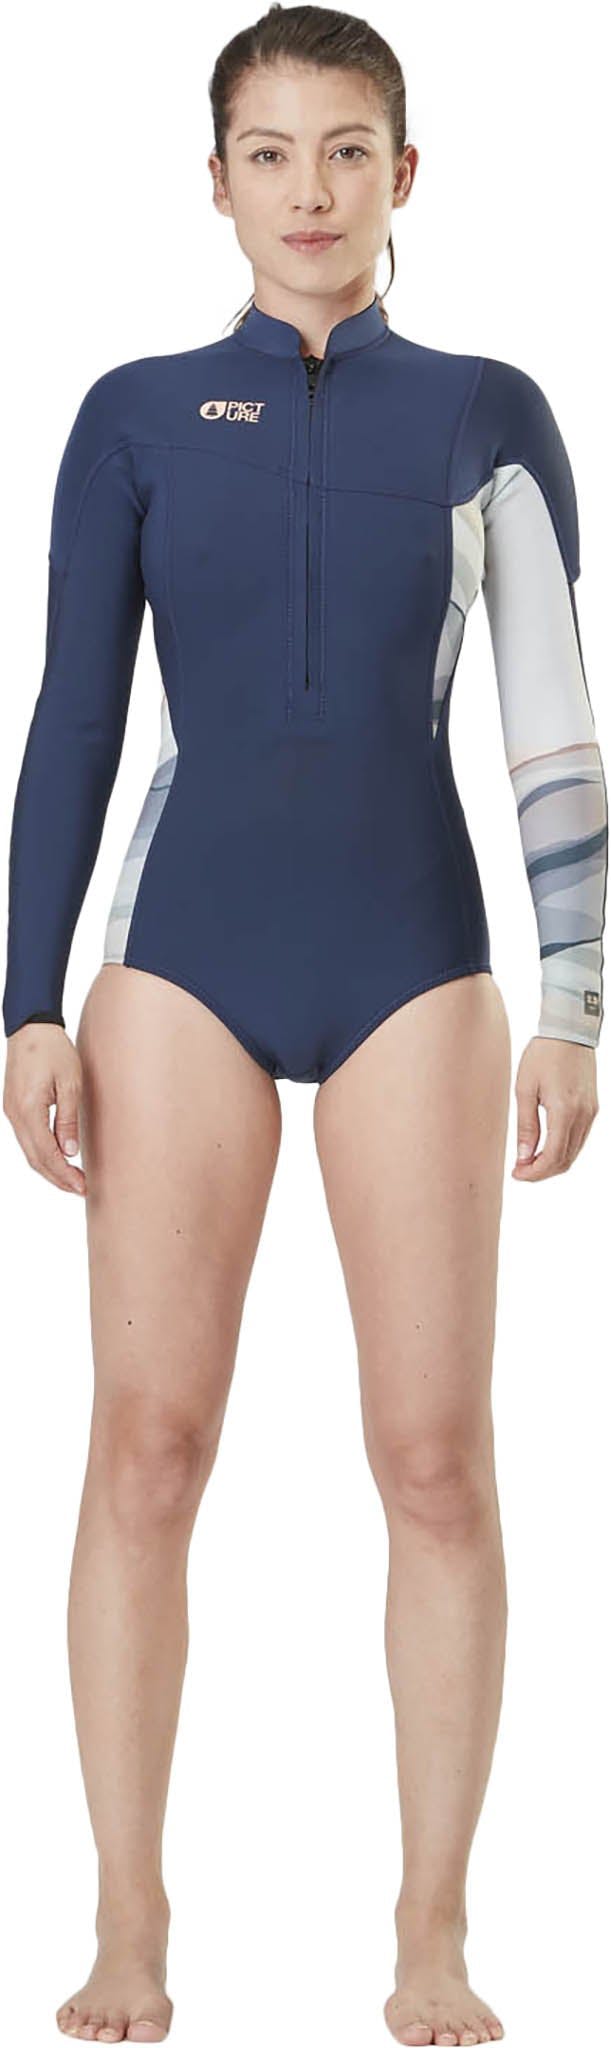 Product image for Meta Sl 2/2 Fullzip Wetsuits - Women's